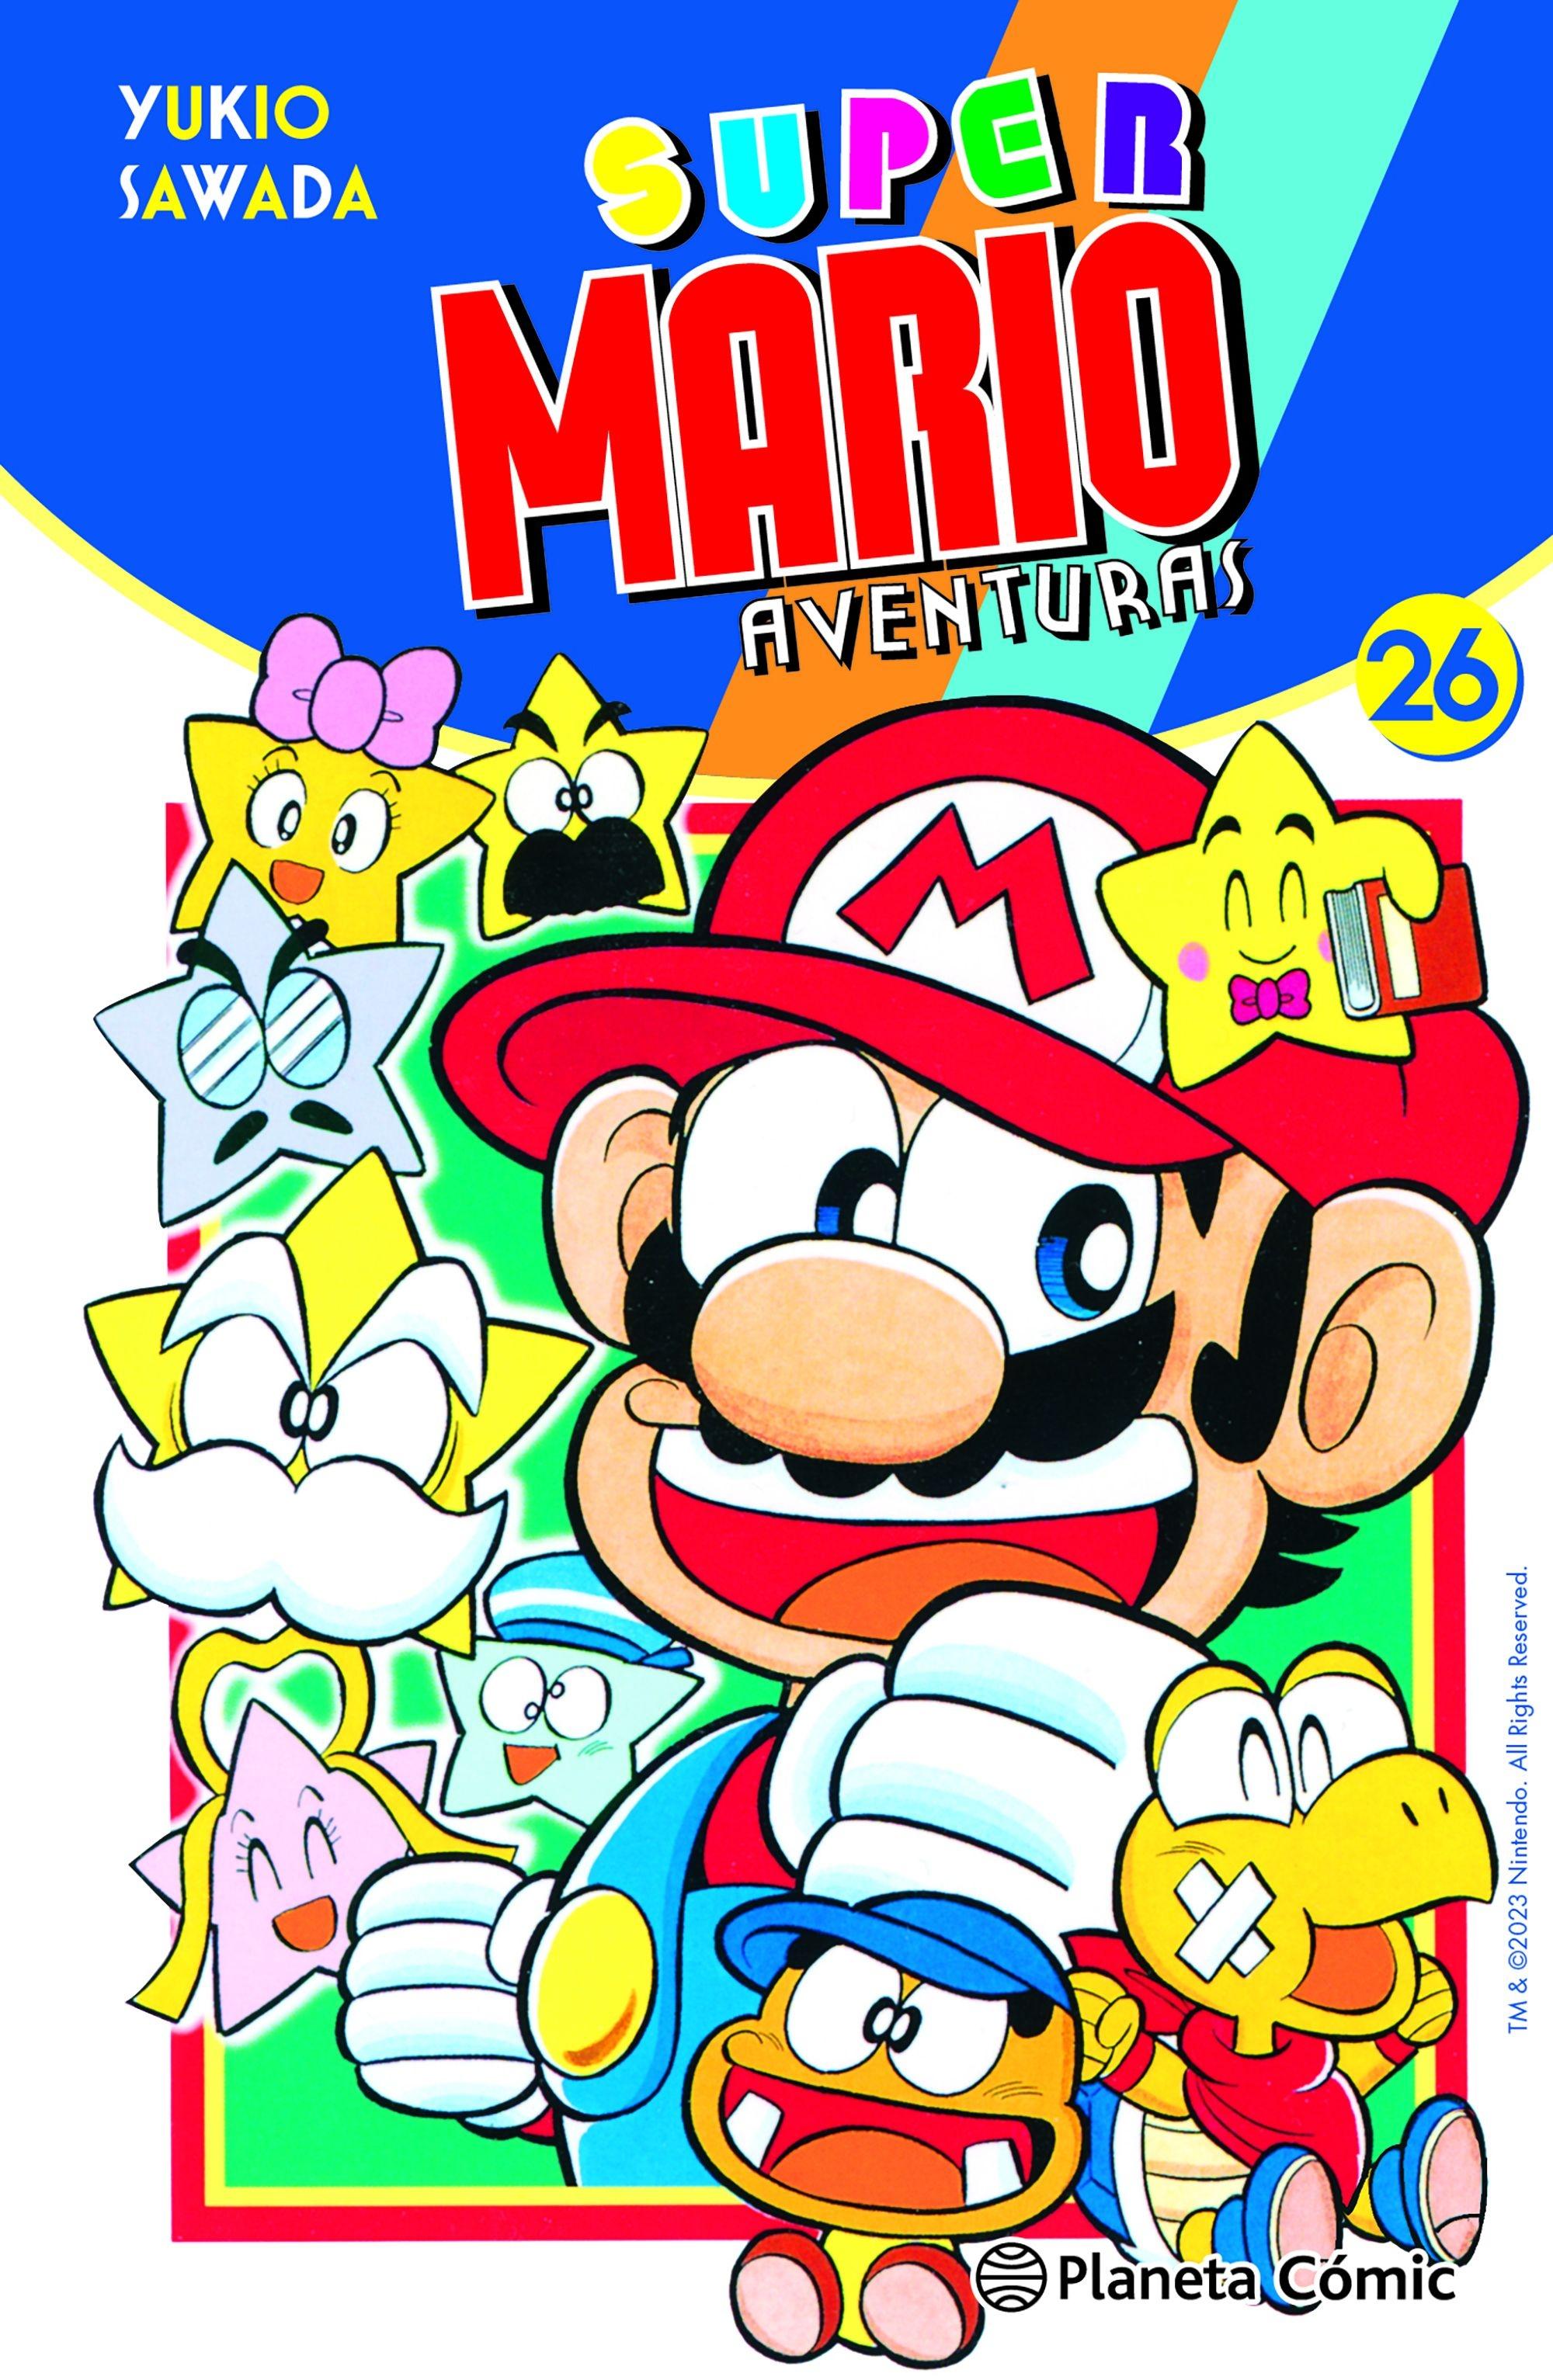 Super Mario Nº 26 "Aventuras"